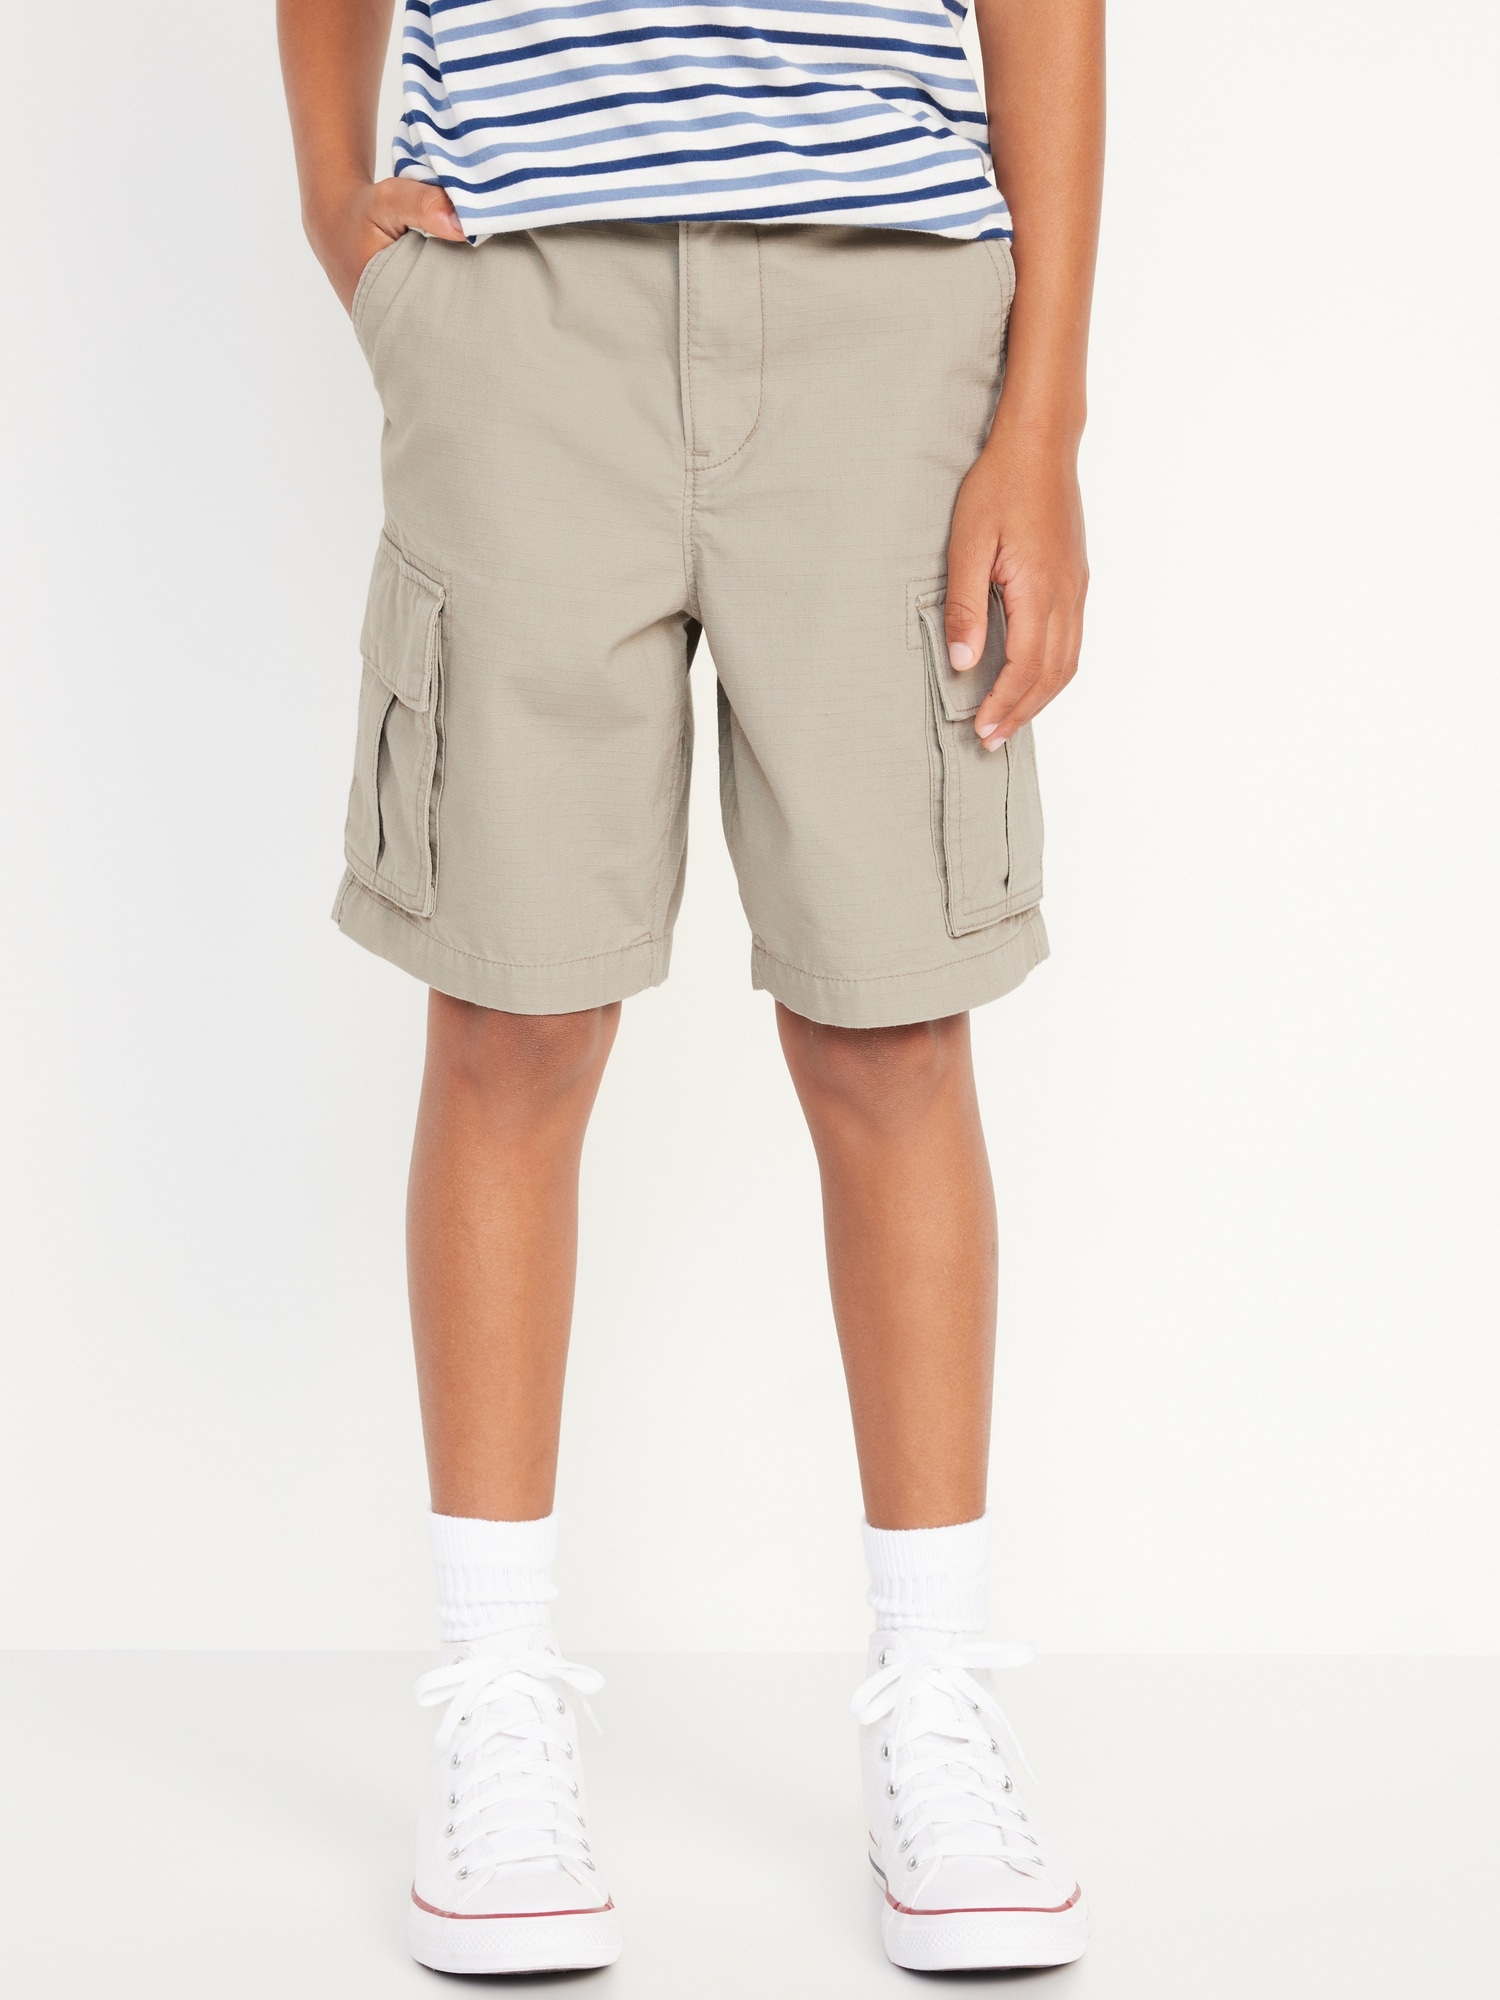 Old Navy Boys' Loose Cargo Shorts (At Knee) Beige Regular Size 18